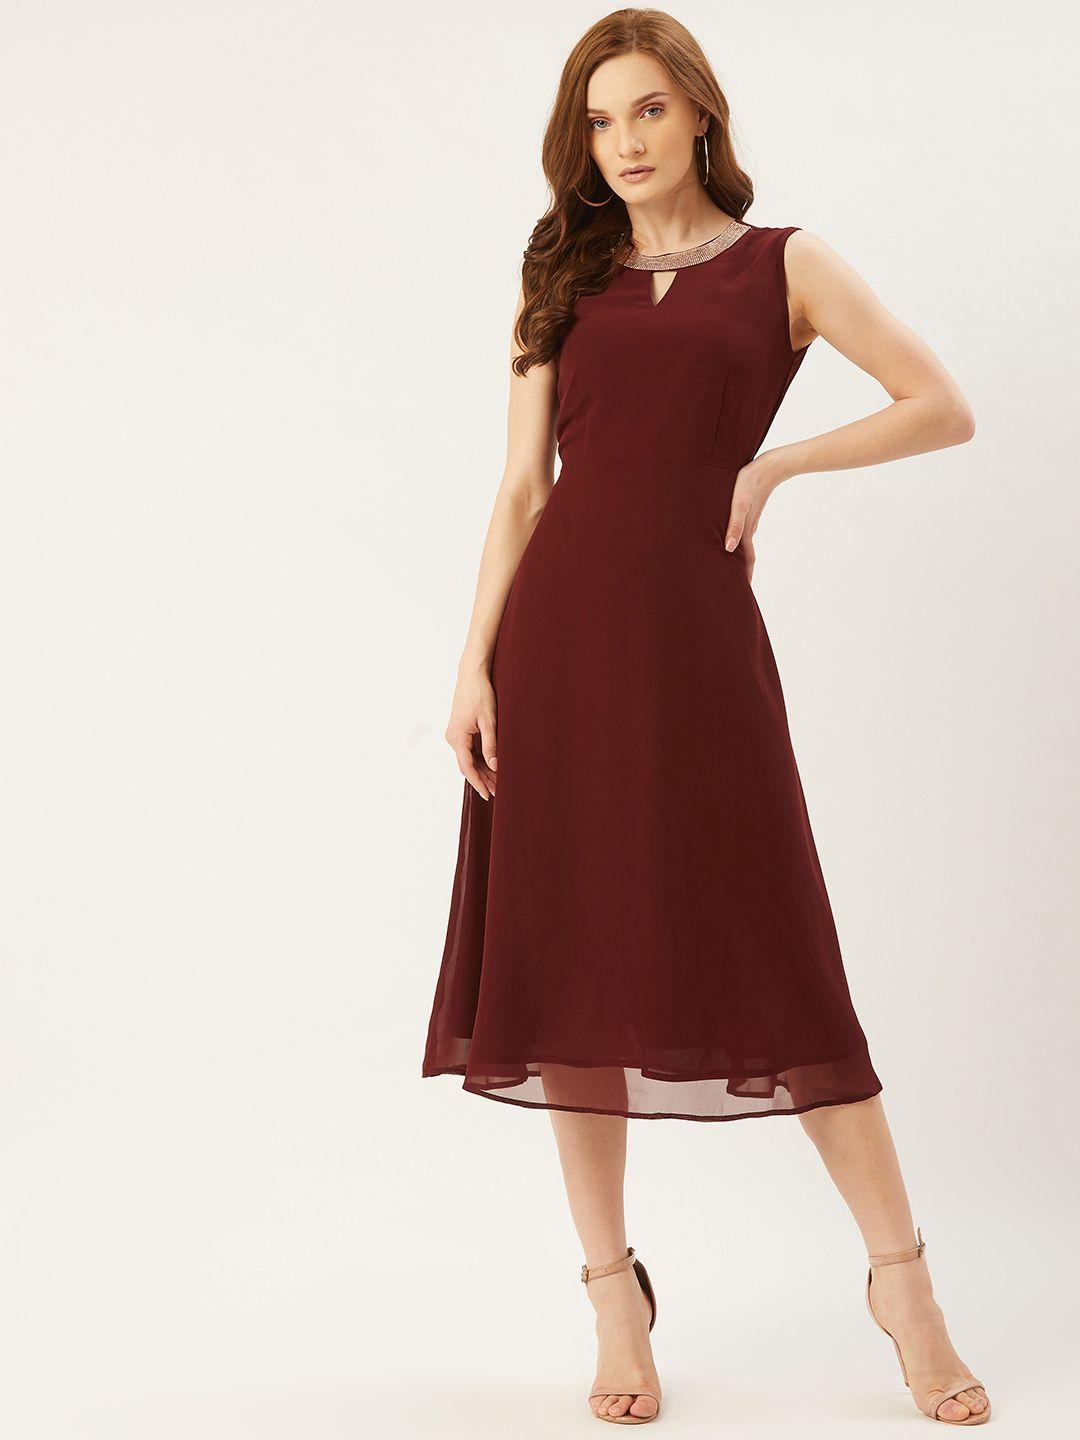 slenor women burgundy solid a-line dress with jewel neck